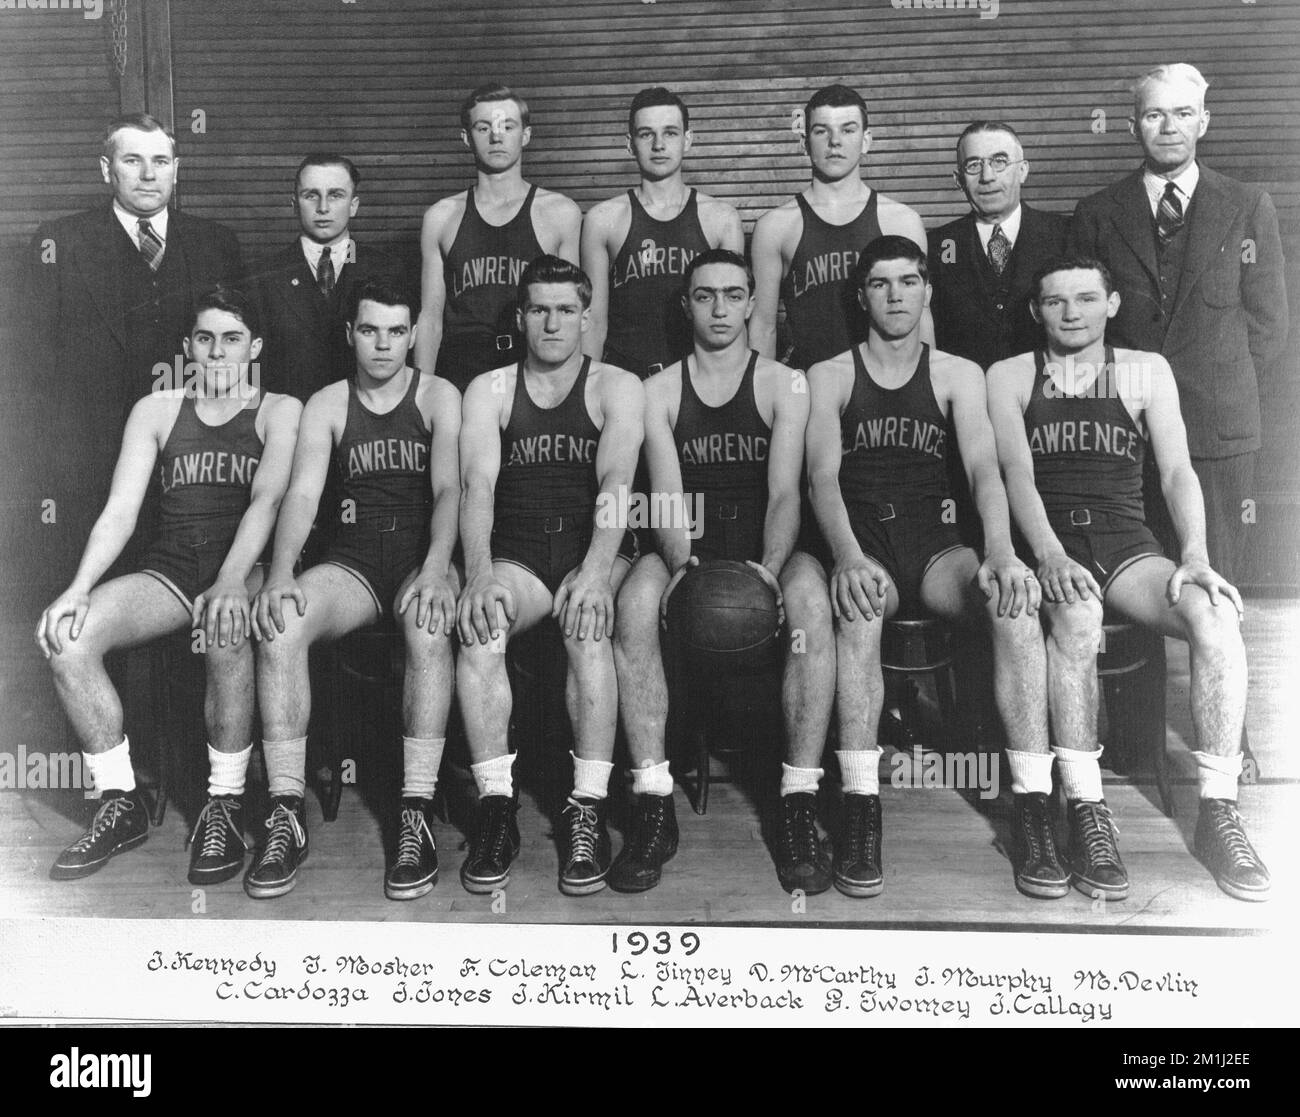 1939 Lawrence High School basketball team , Basketball players, Lawrence High School Lawrence, Mass. Stock Photo